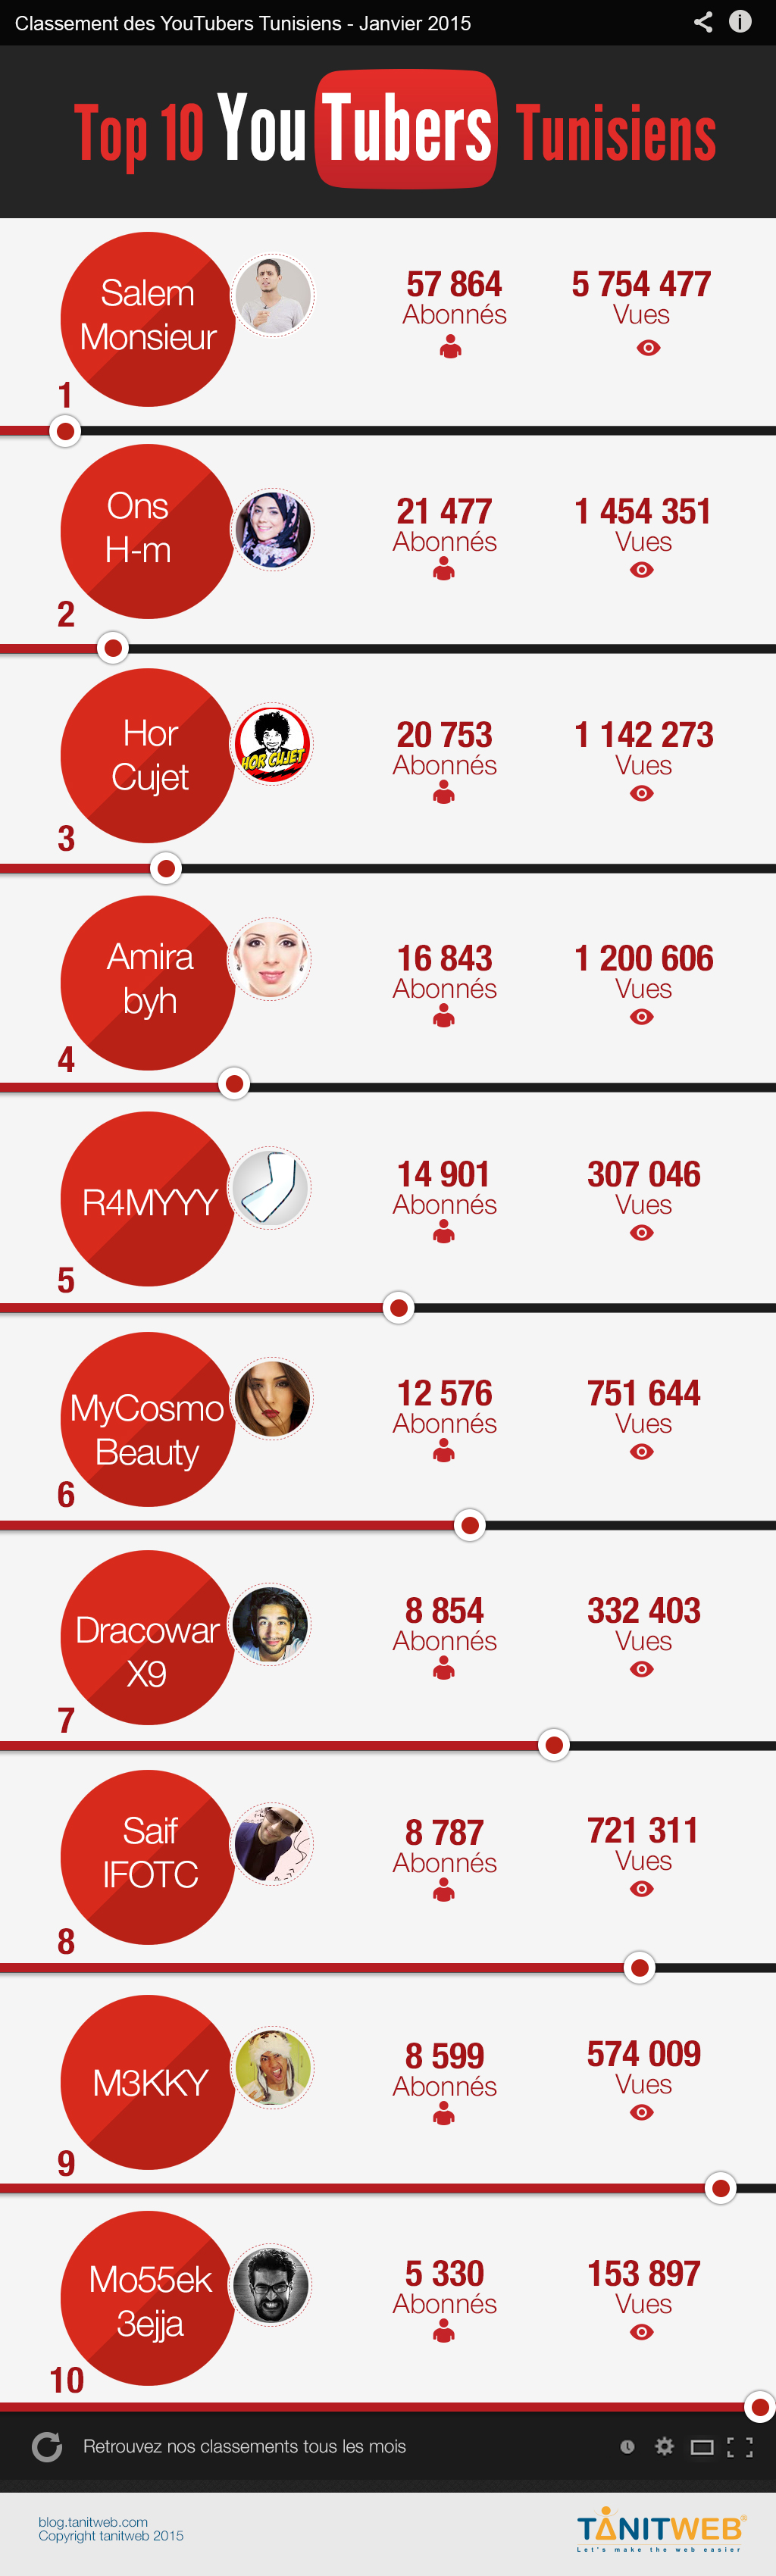 TOP 10 YouTubers Tunisiens - Janvier 2015